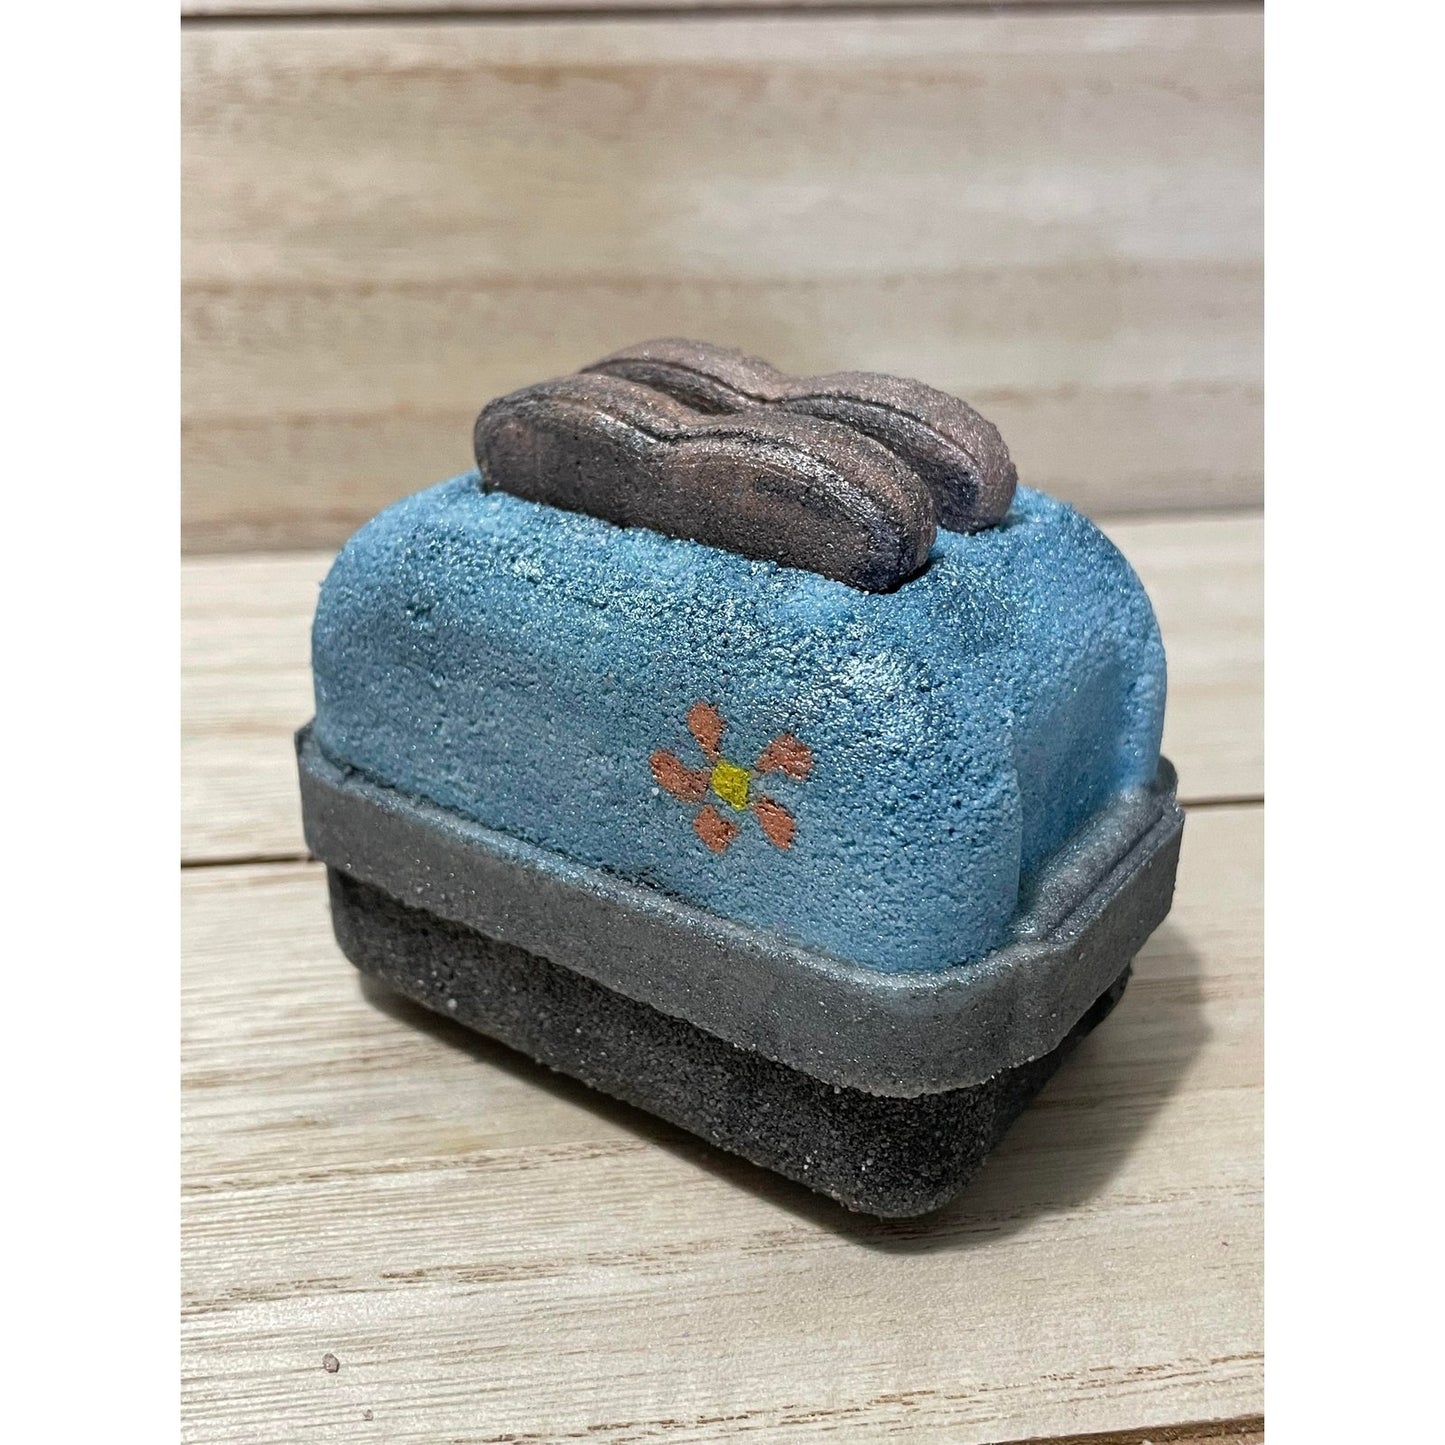 Toaster Bath Bomb Hand Mold